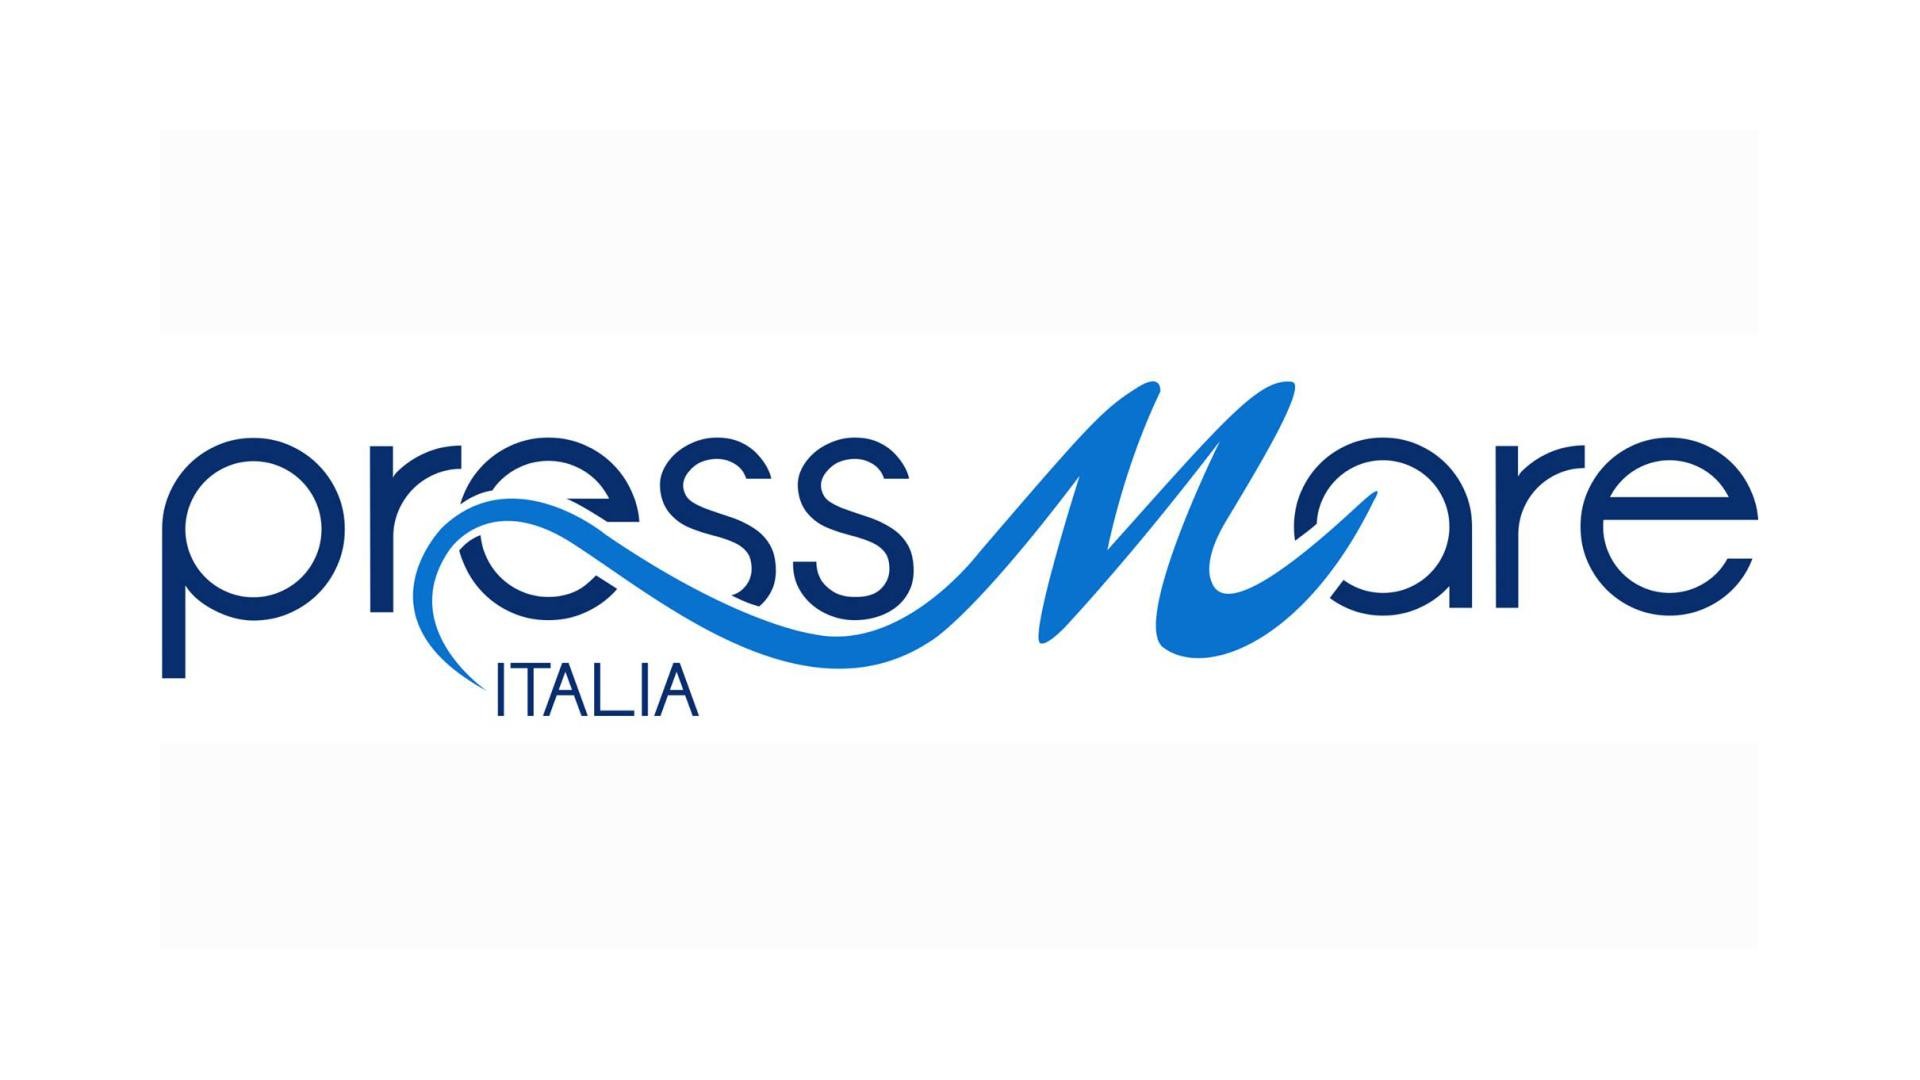 PressMare Italia